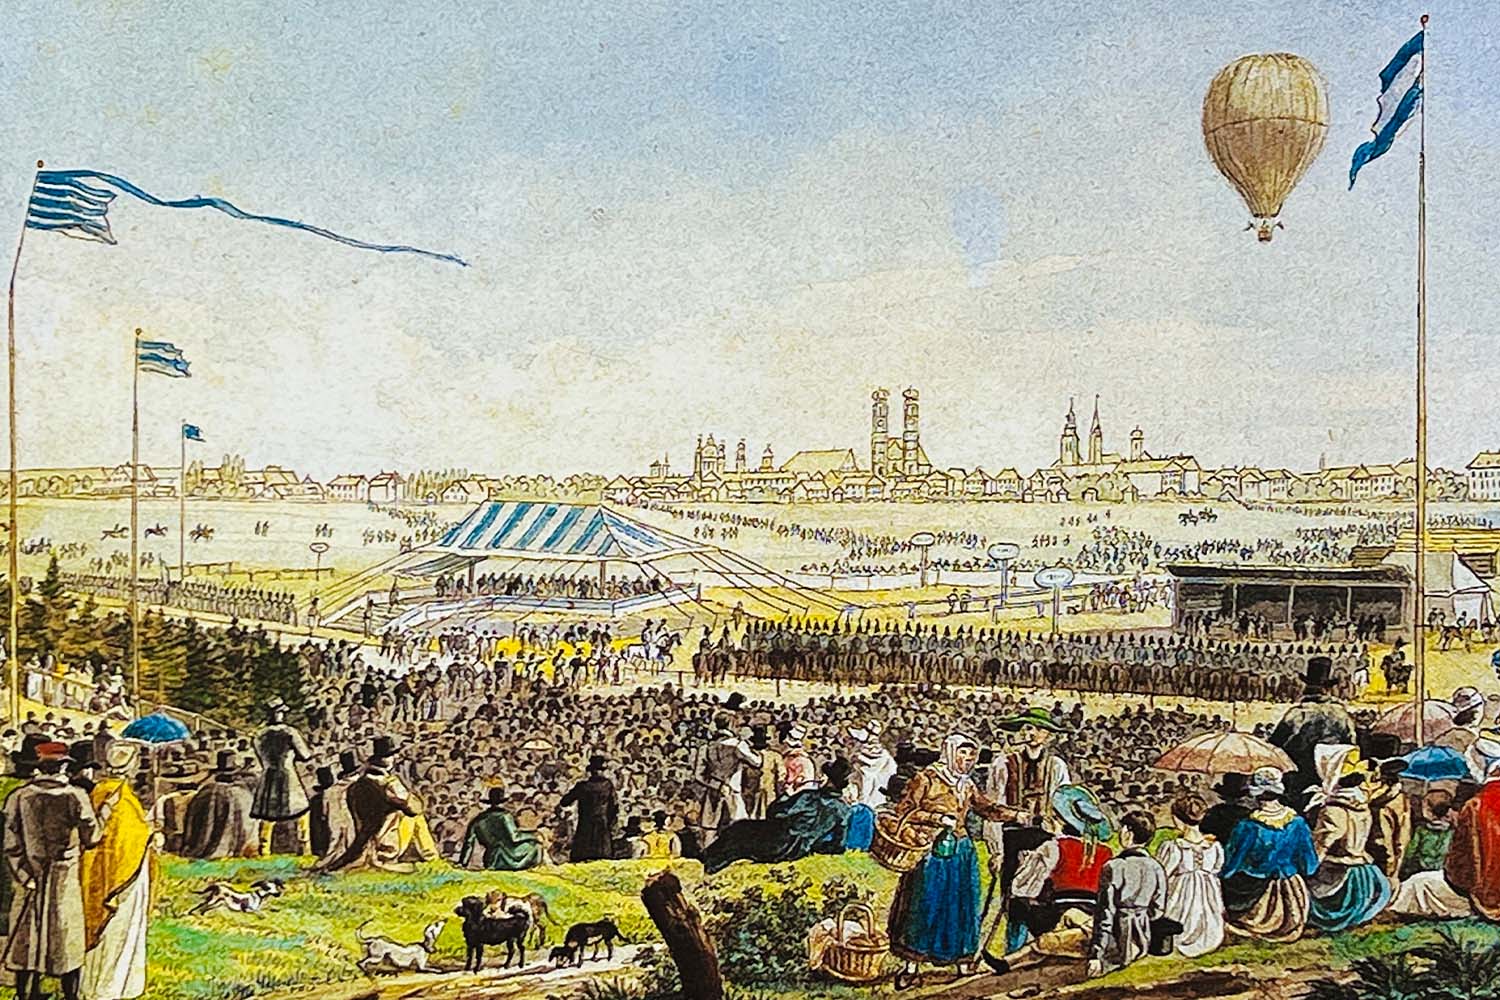 Munich Beer Fest in 1823